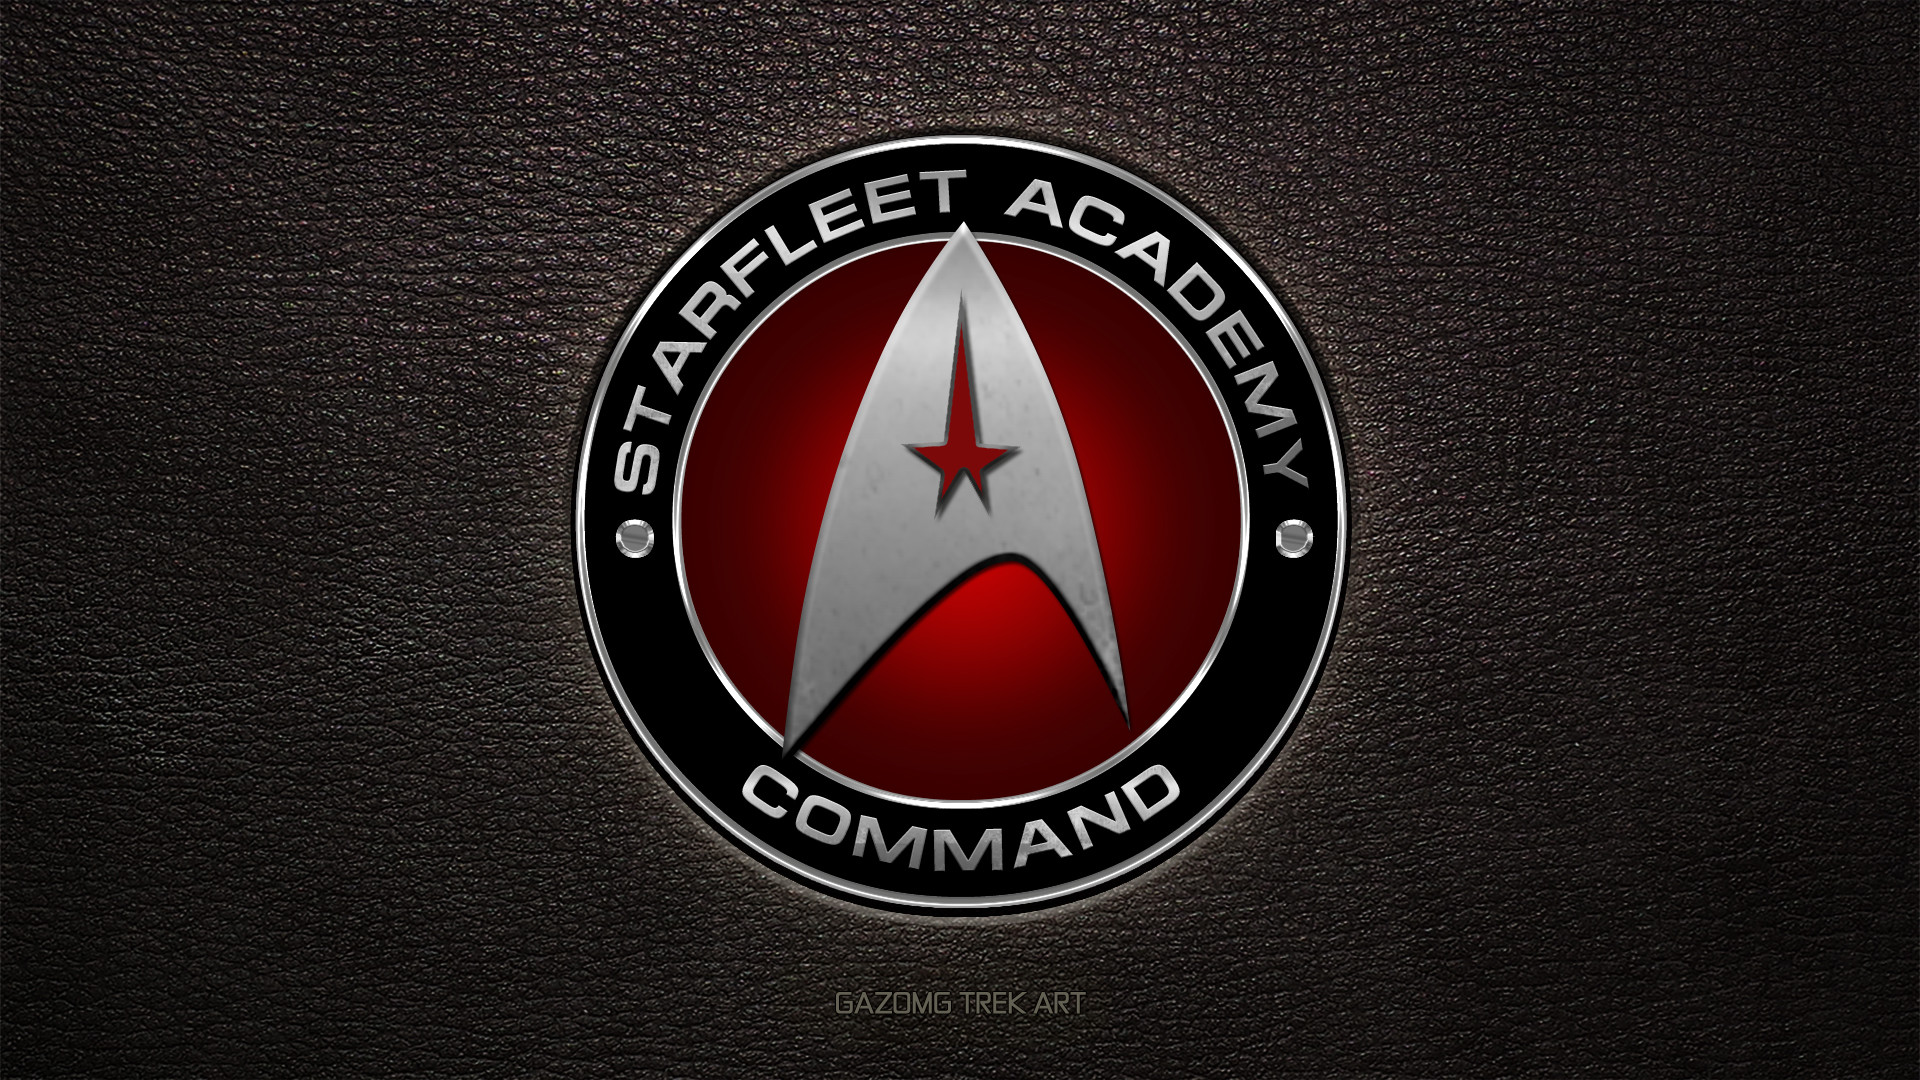 1920x1080 ... Starfleet Academy Logo Star Trek (updated) by gazomg